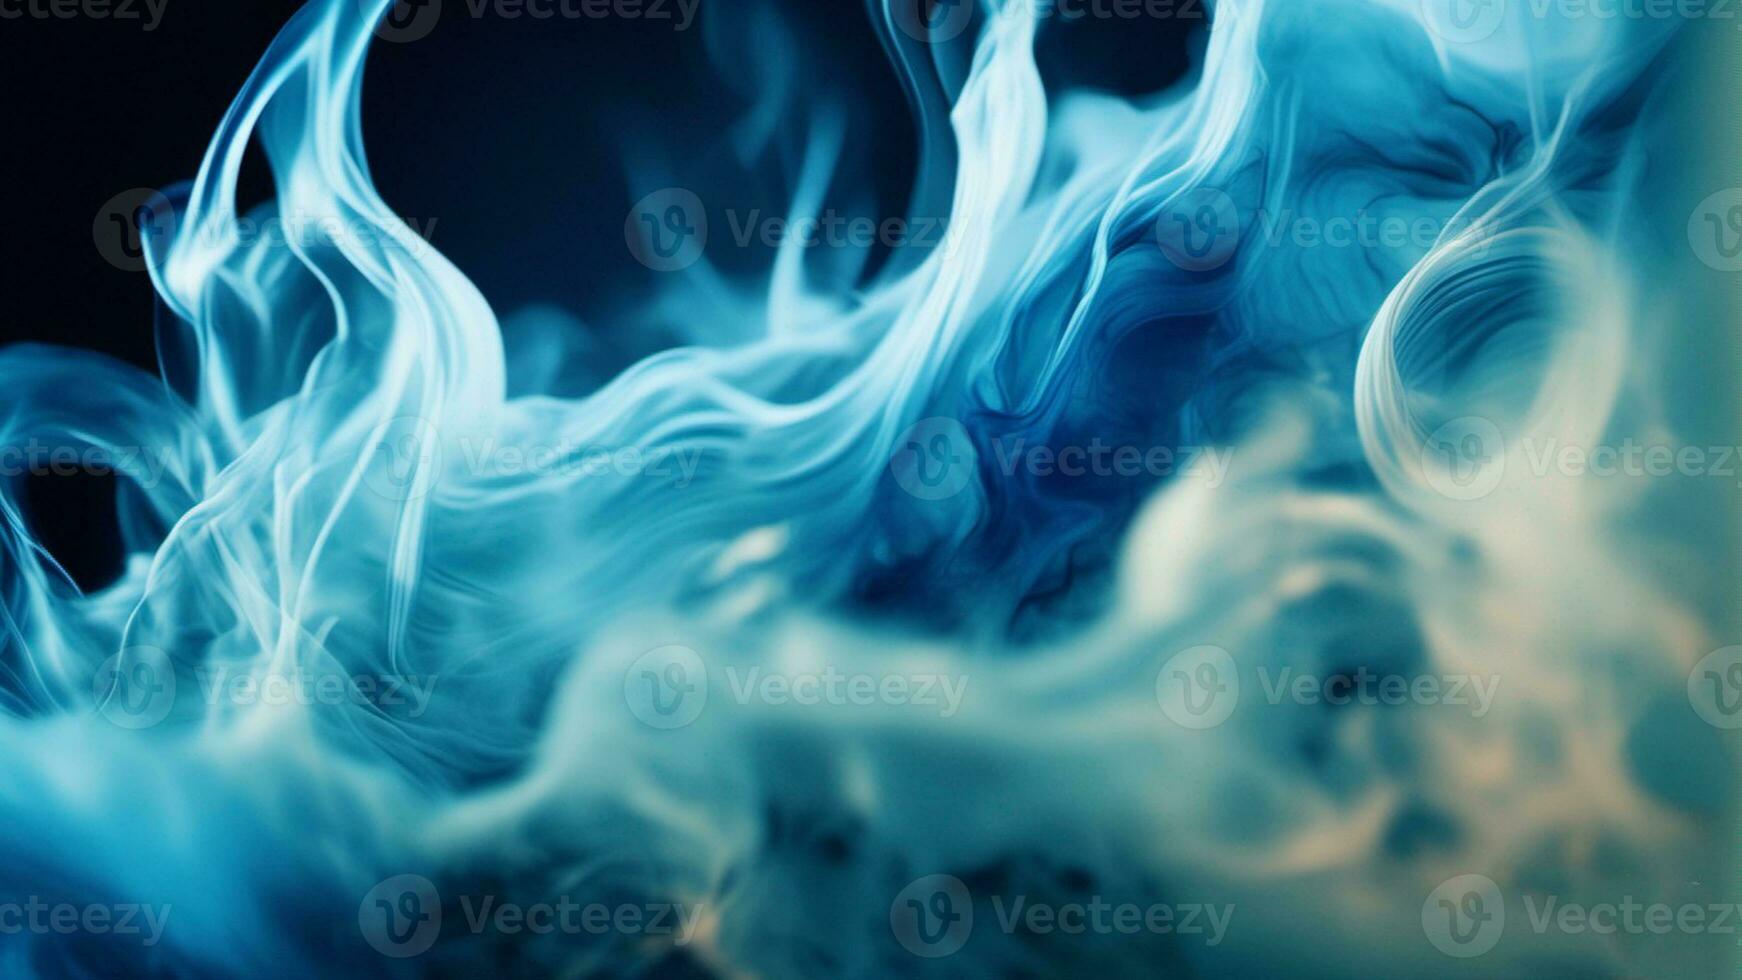 azul cor foto do tinta dentro ar respingo acrilico pintura mistura líquido tingir. gerado por IA